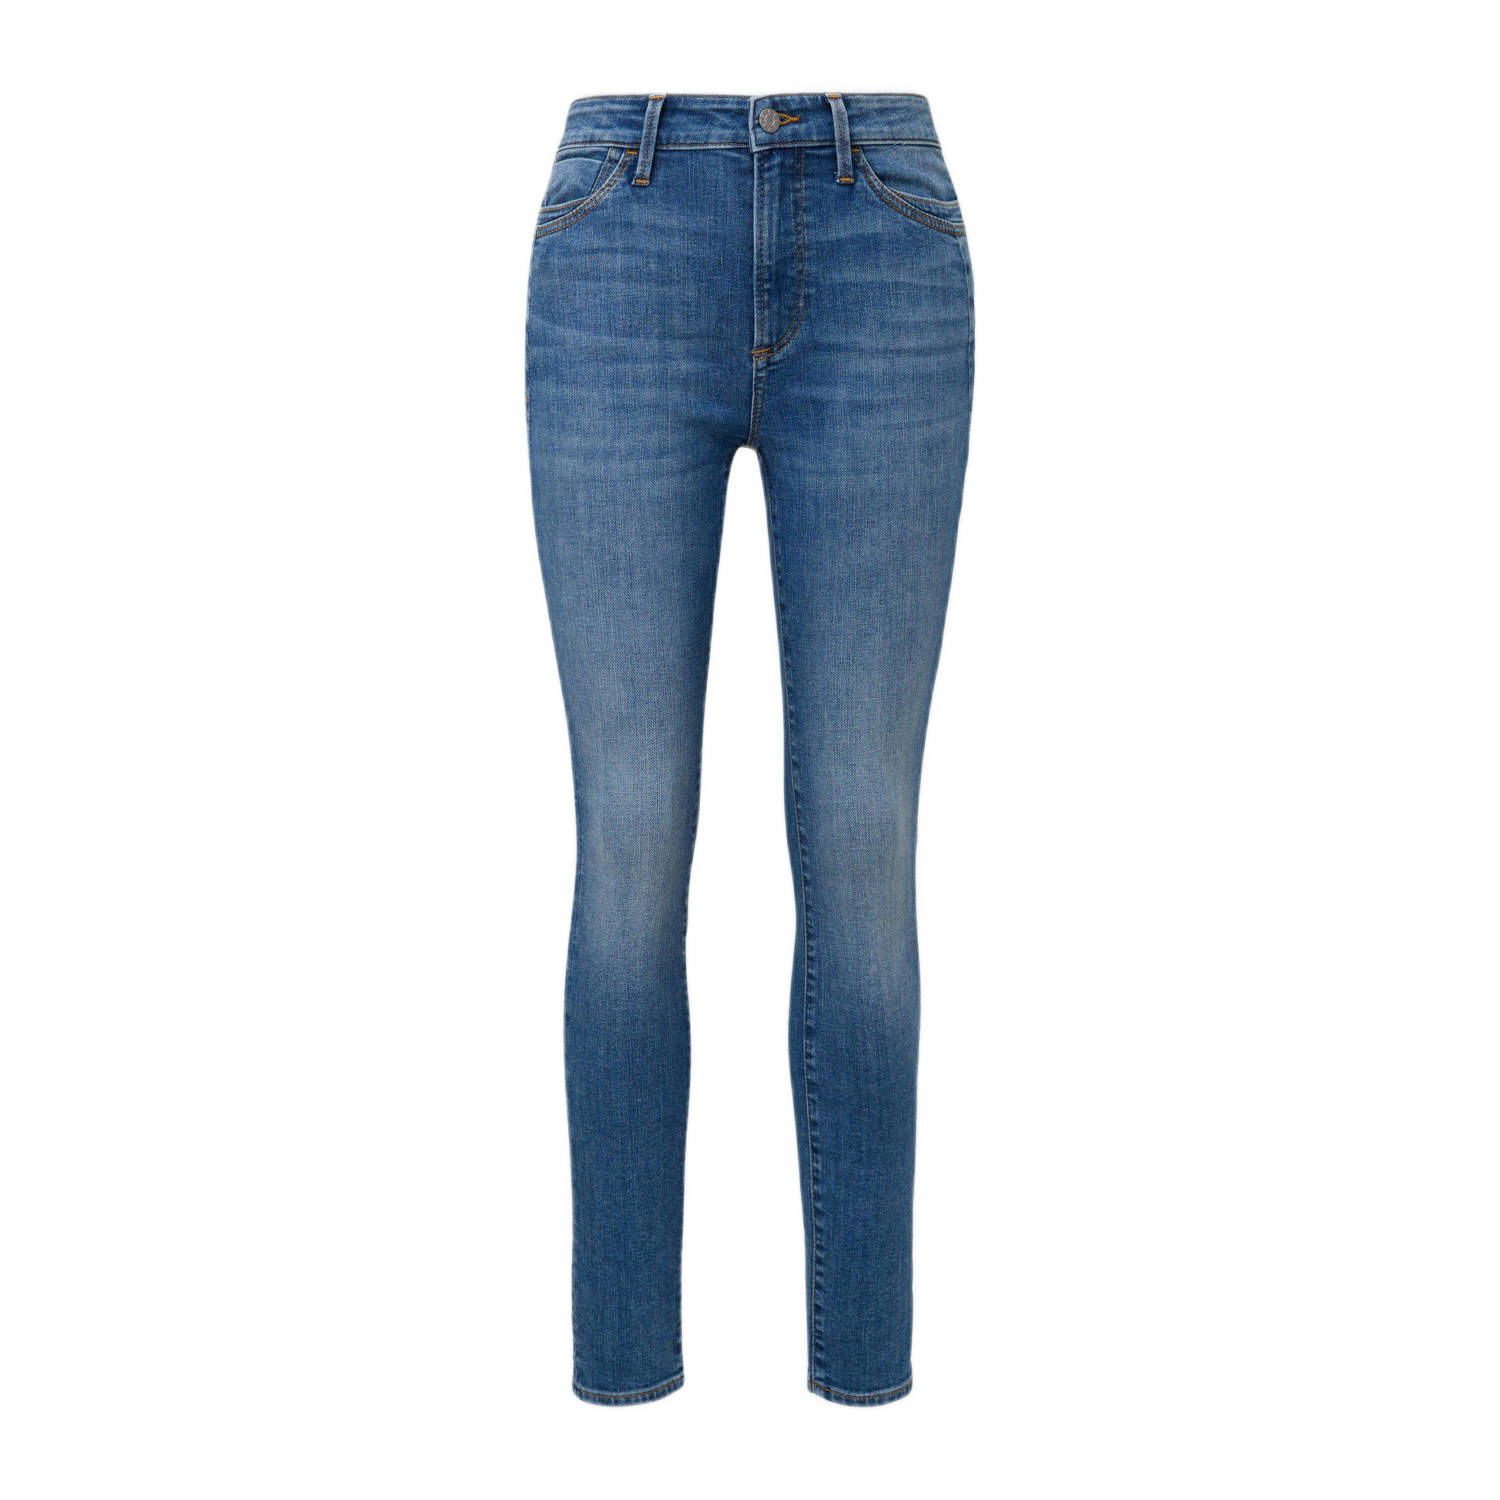 S.Oliver skinny jeans medium blue